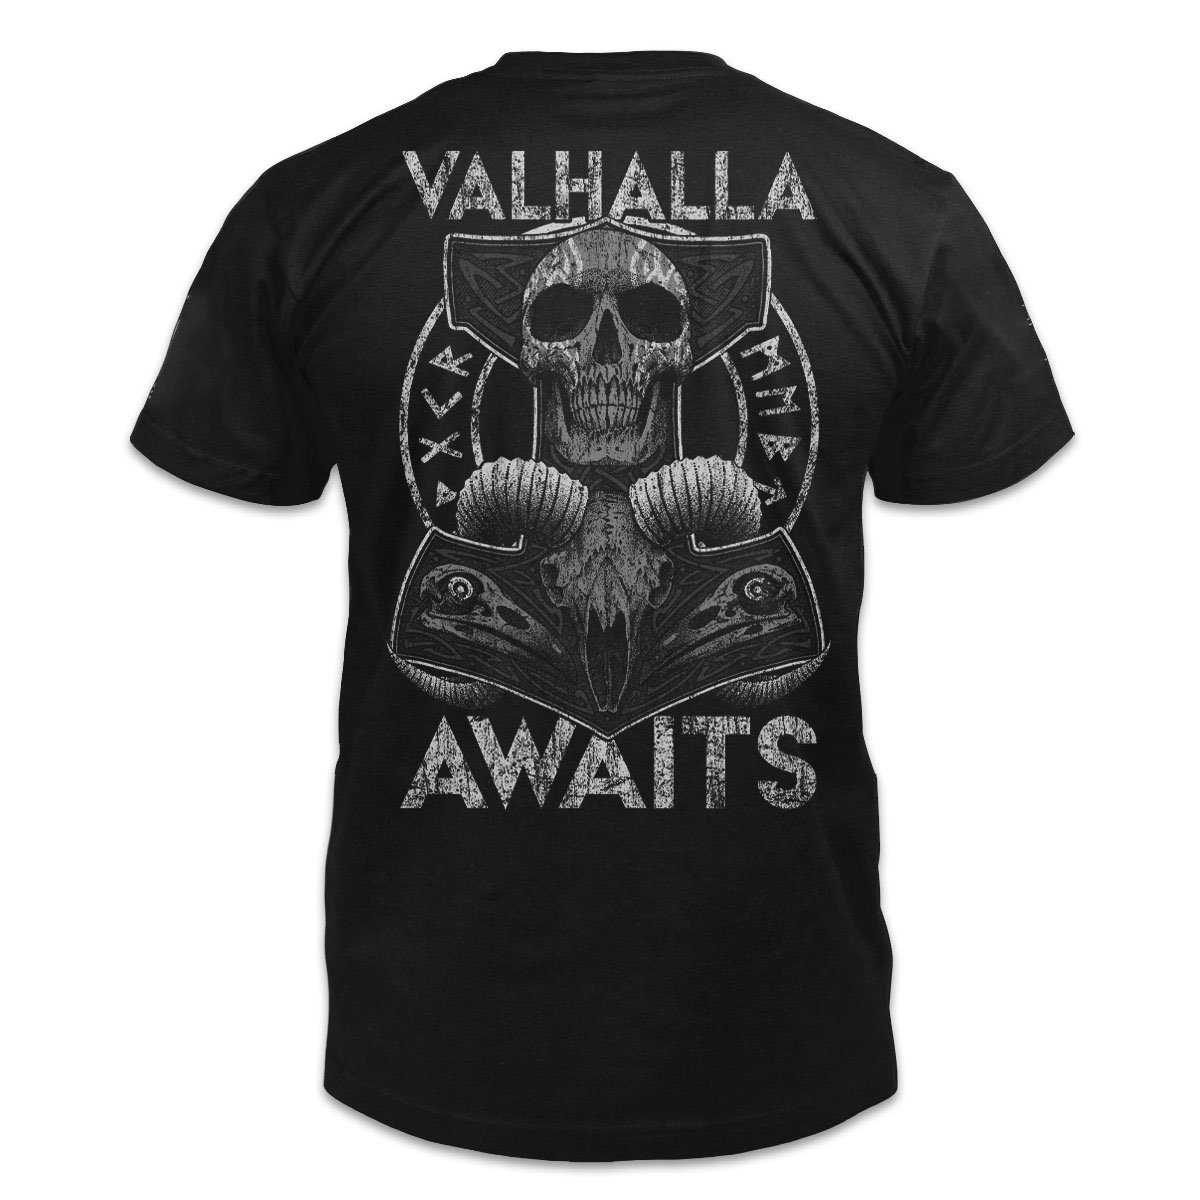 Veteran Shirt, Skull Shirt, Skull T Shirt, Valhalla Awaits T-Shirt KM0507